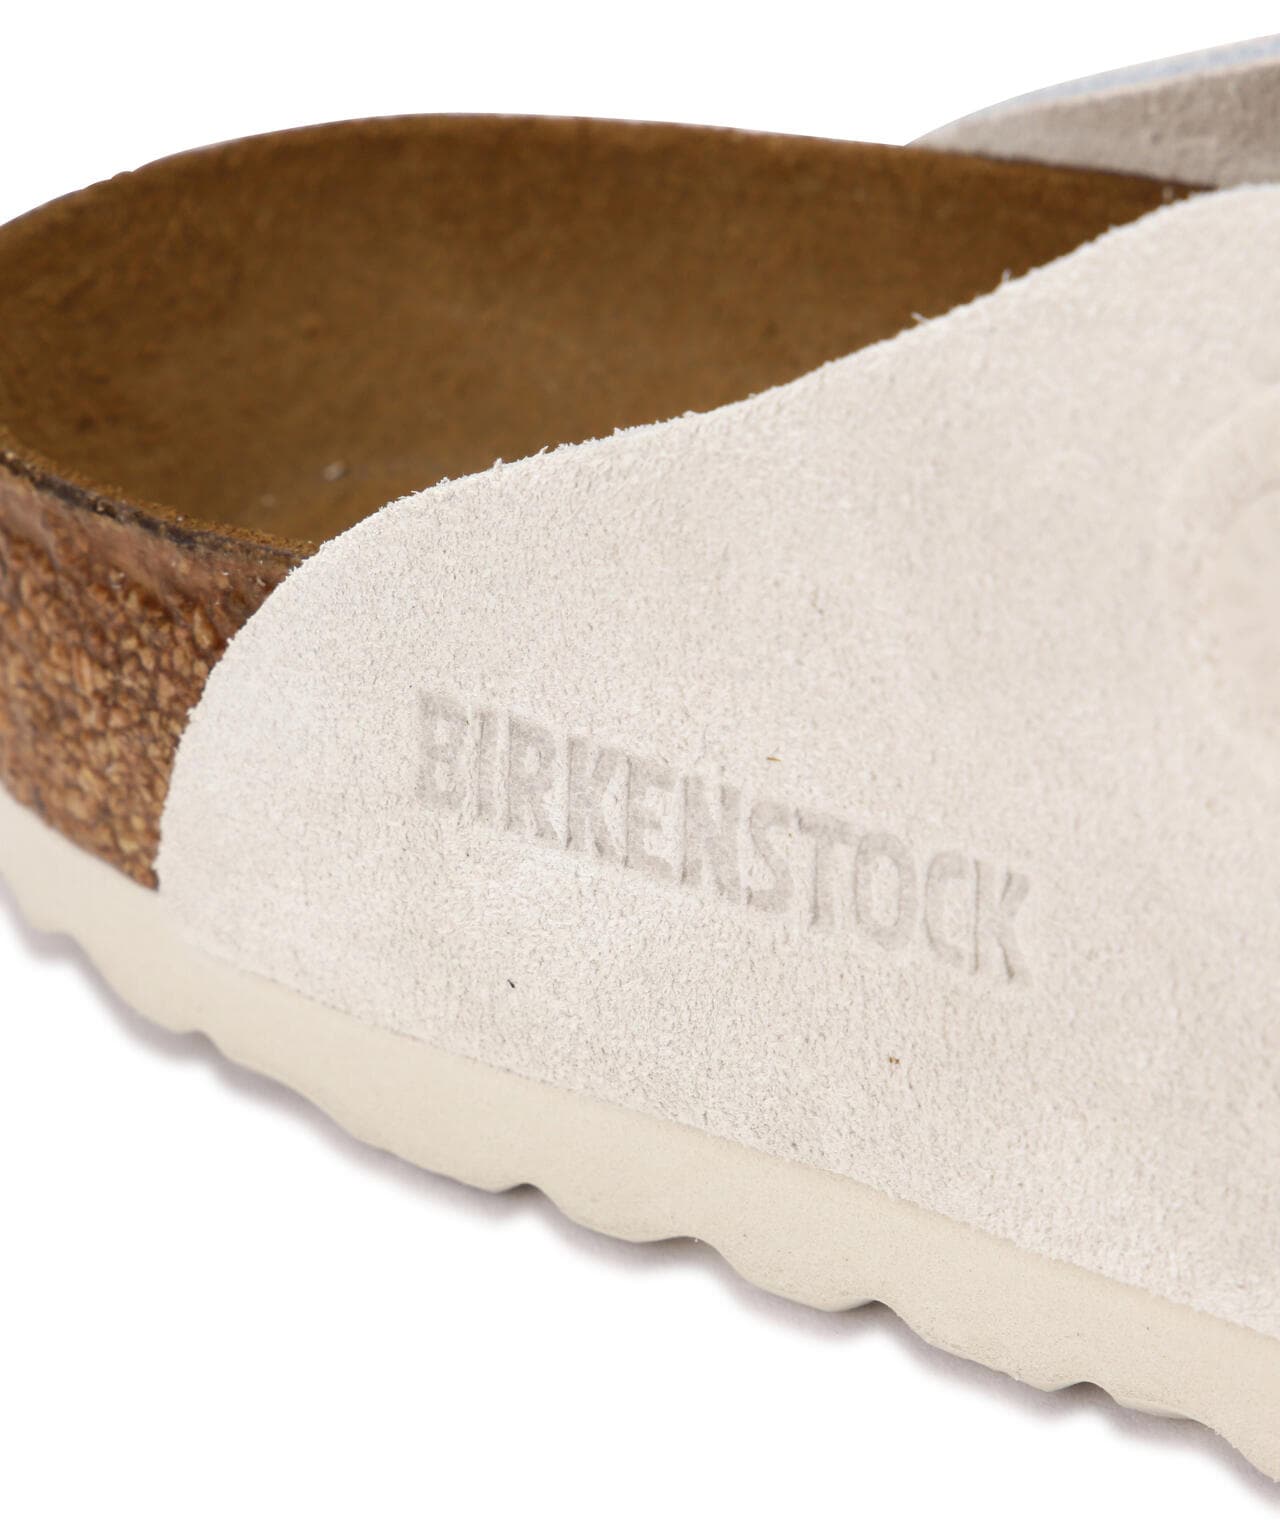 BIRKENSTOCK/ビルケンシュトック/Boston VL Antique White/ボストン アンティークホワイト